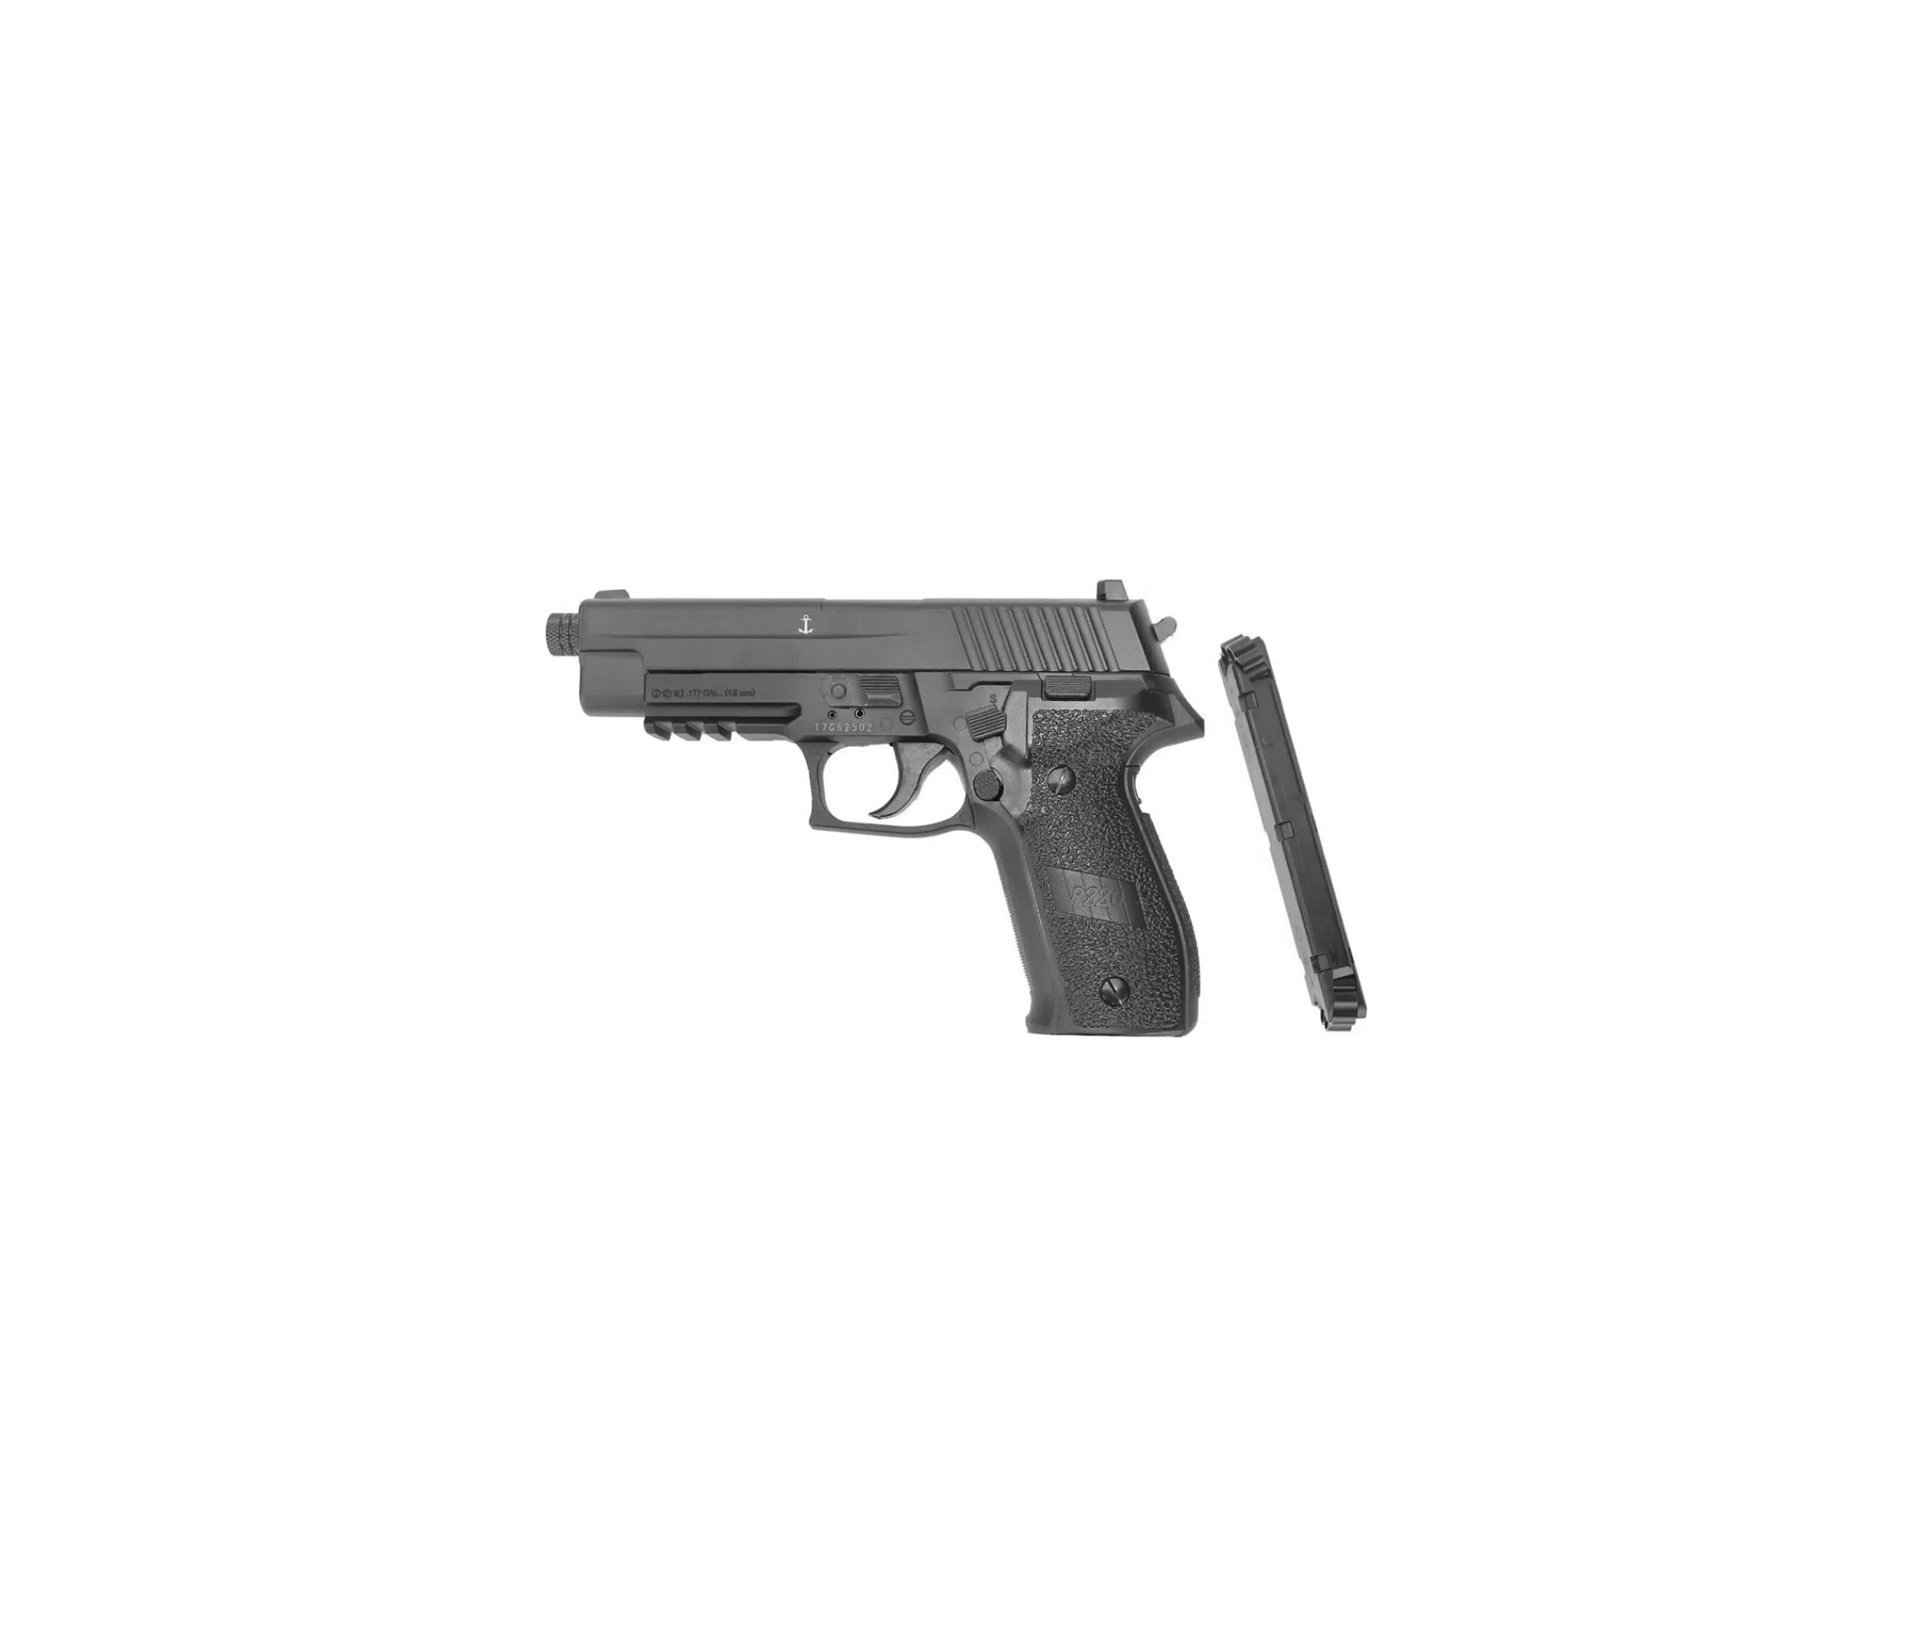 Pistola Pressão Sig Sauer P226 Co2 Full Metal Chumbinho 4,5mm 16 Tiros (8+8) Blowback + 10 Co2 + Chumbinho + Maleta